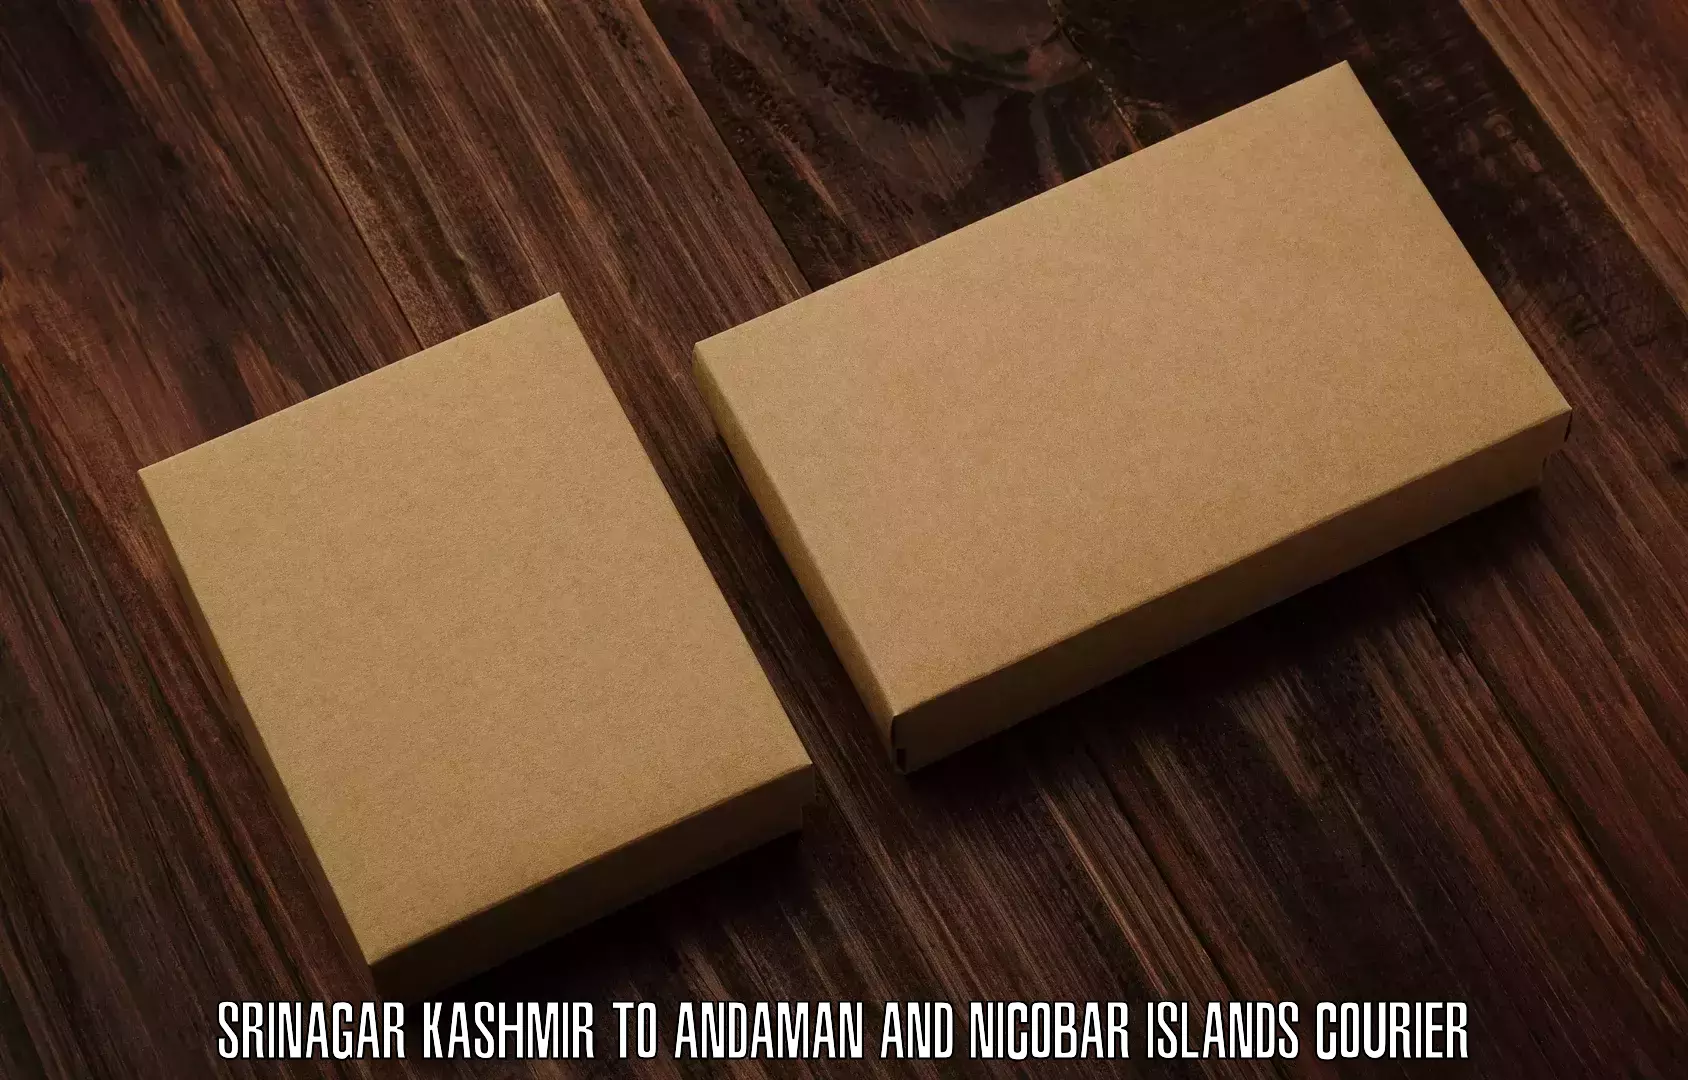 Courier service comparison Srinagar Kashmir to Andaman and Nicobar Islands